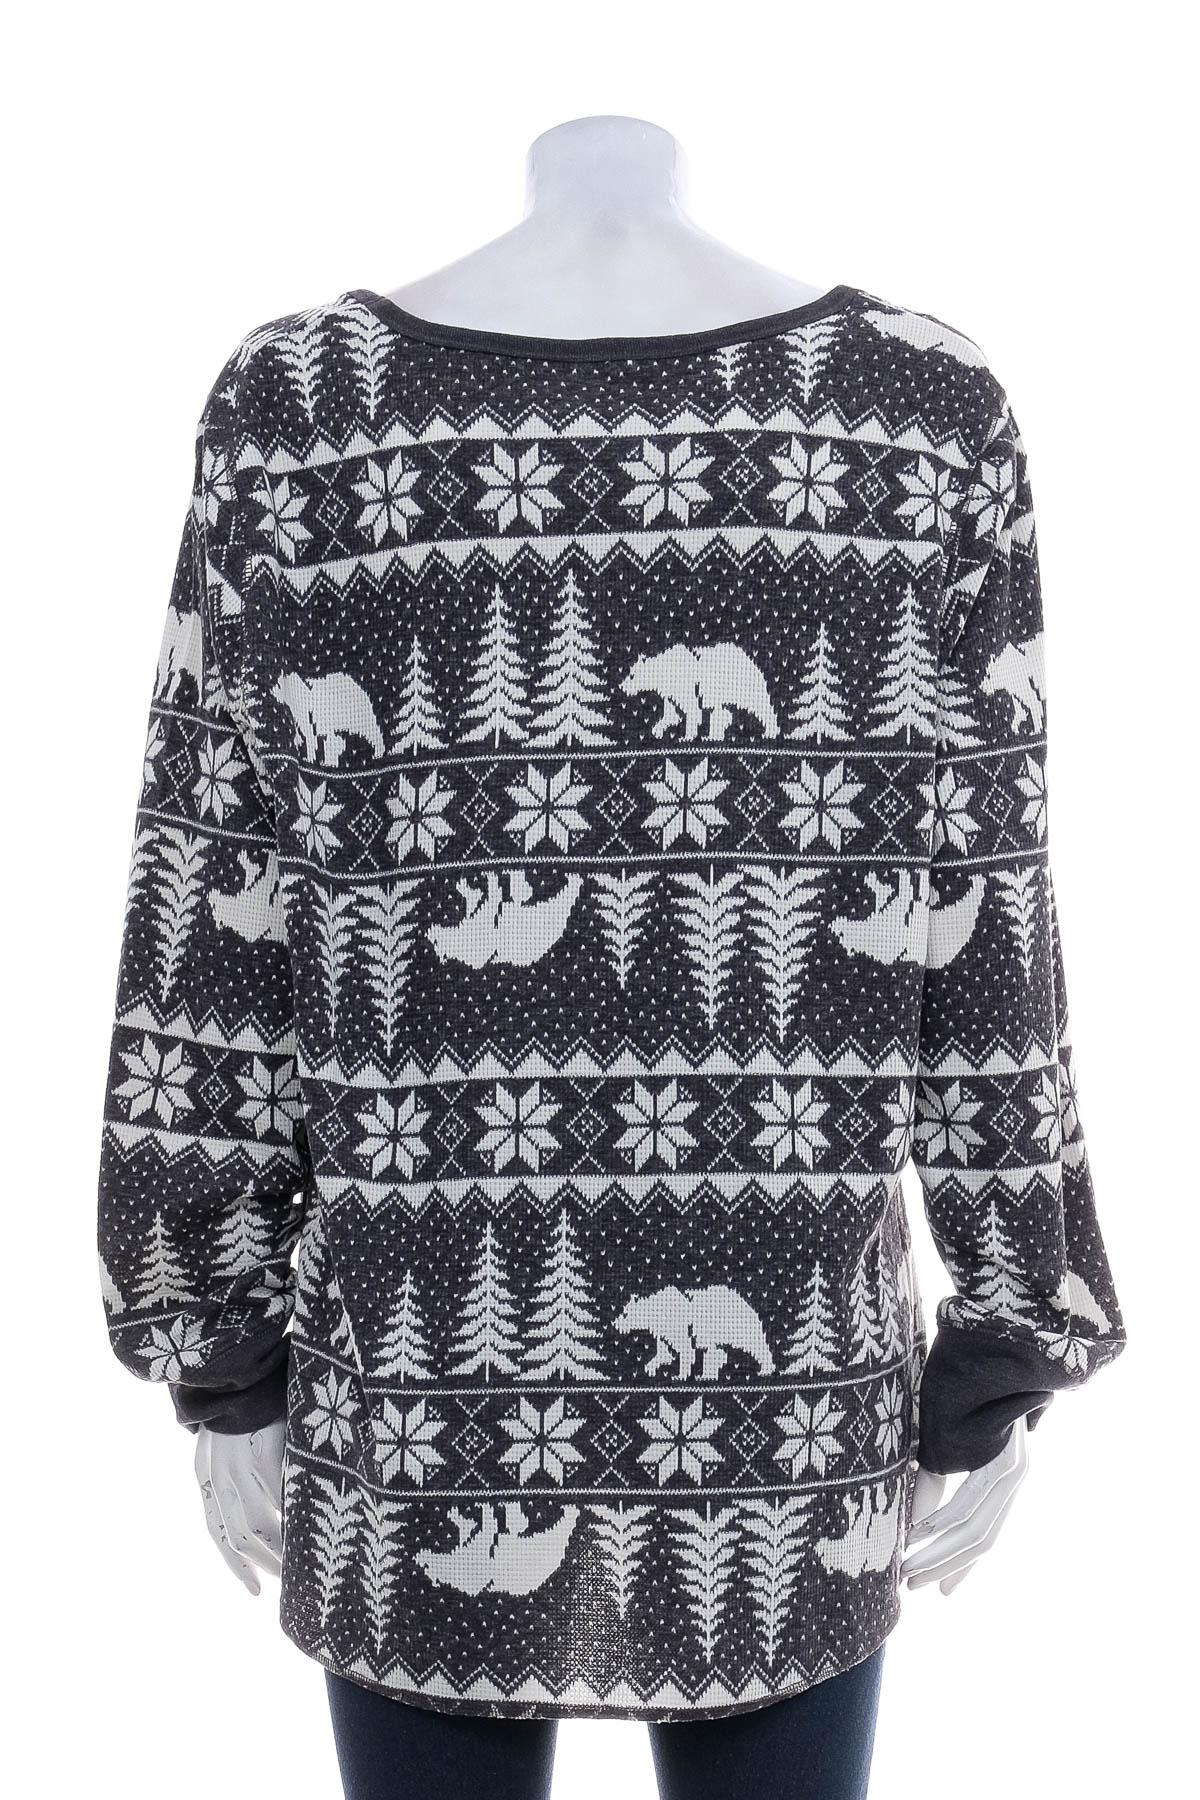 Women's sweater - OLD NAVY - 1